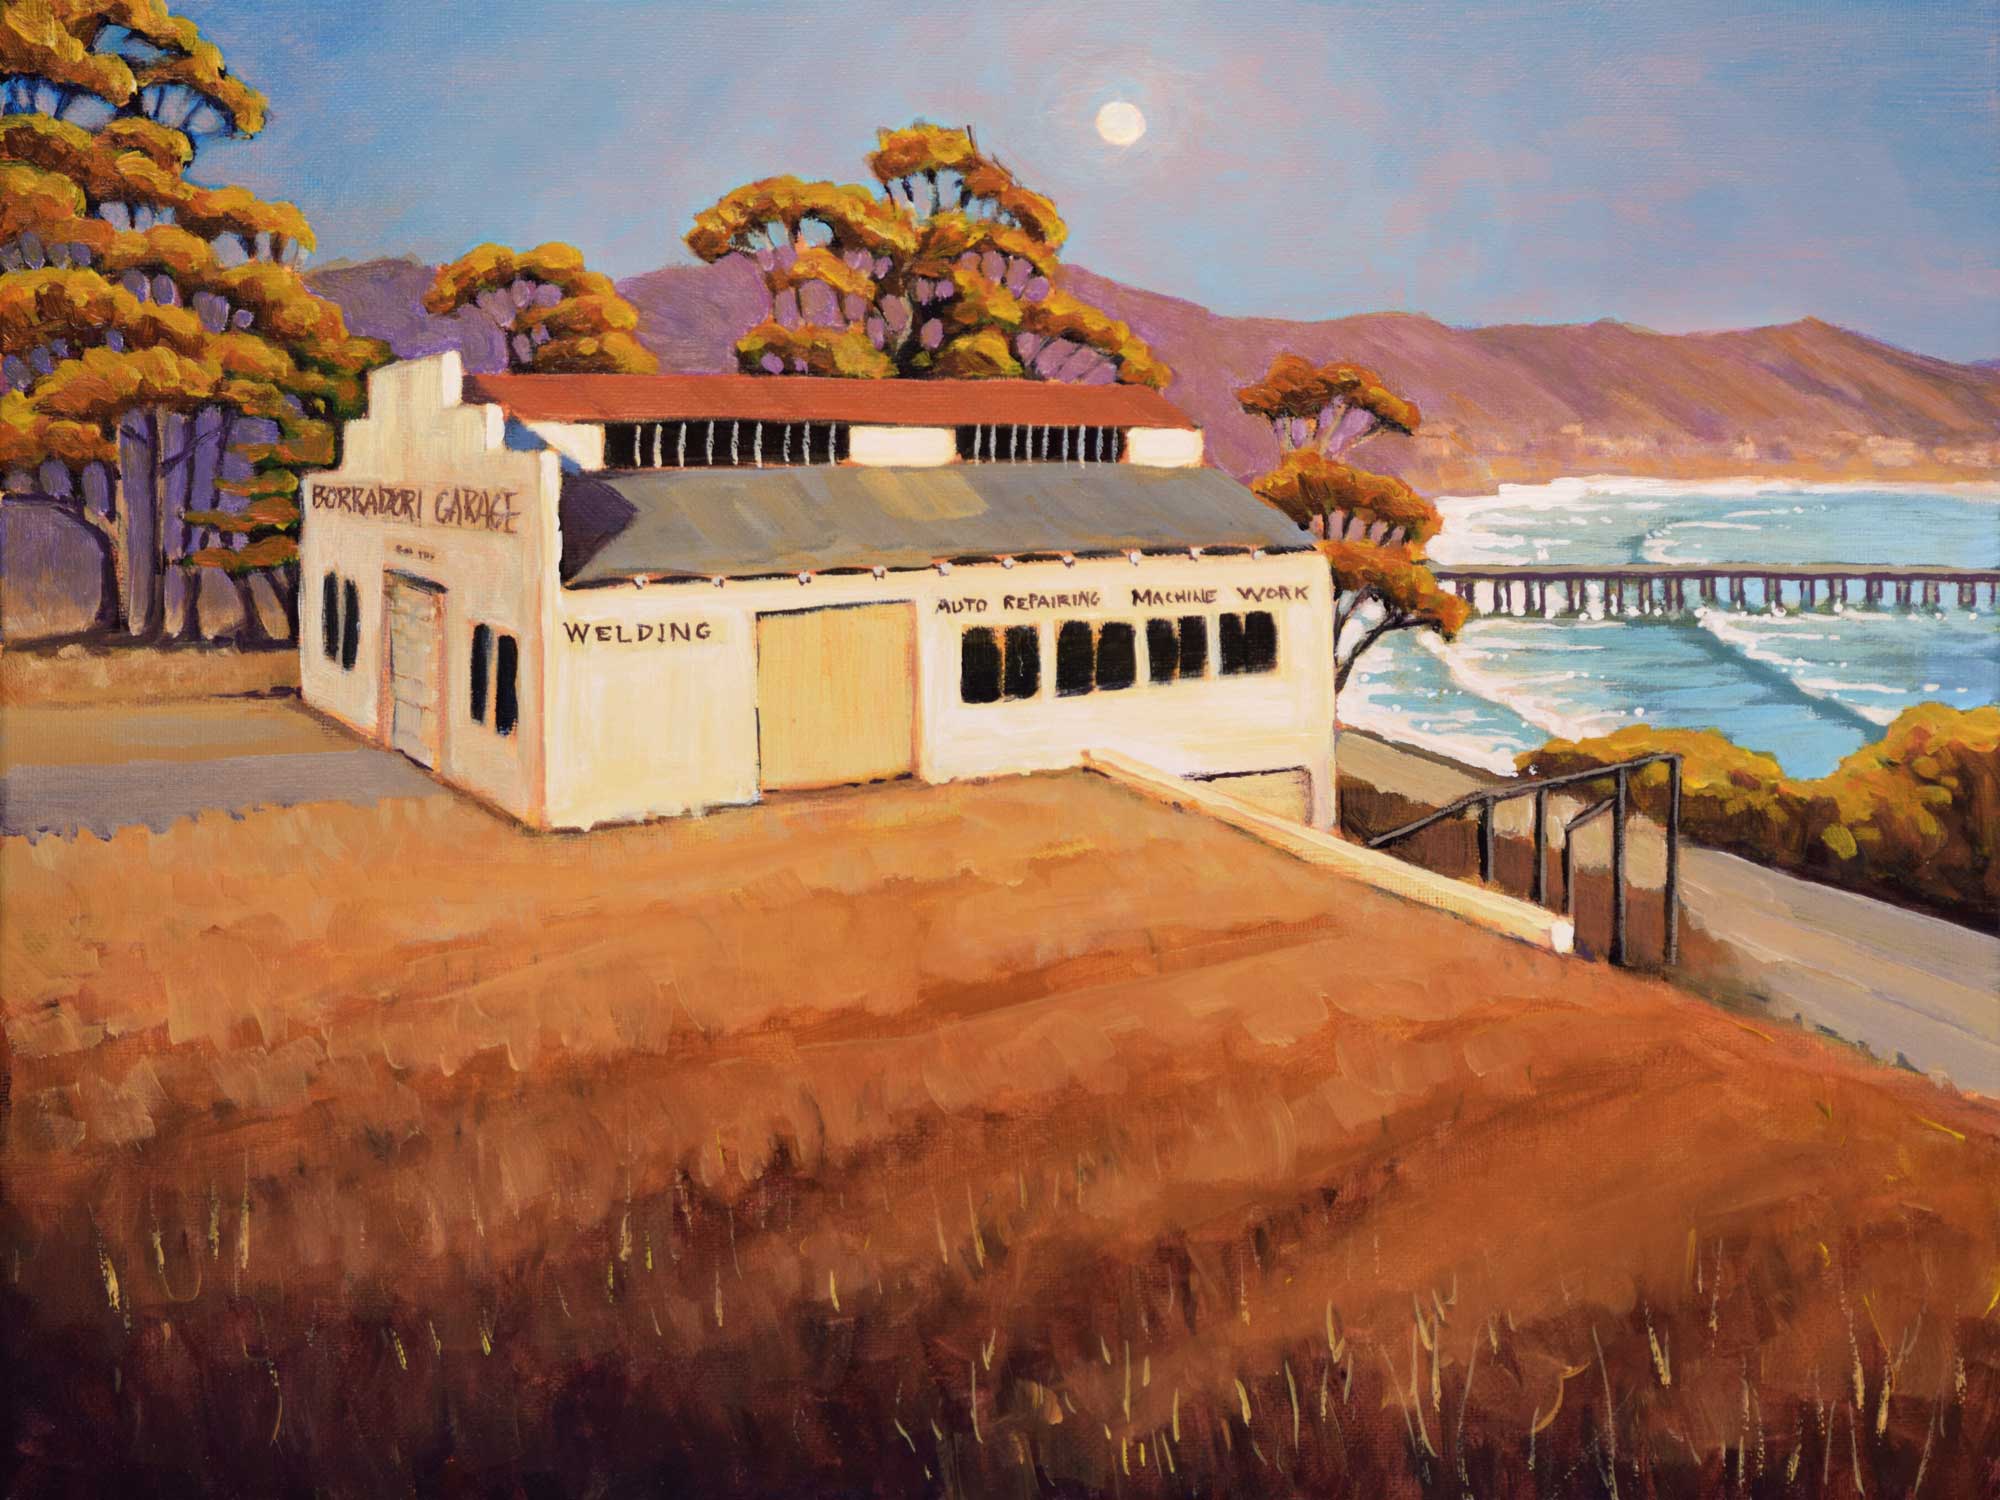 Plein air painting of the Borradori Garage near Cayucos on the central coast of California in San Luis Obispo county